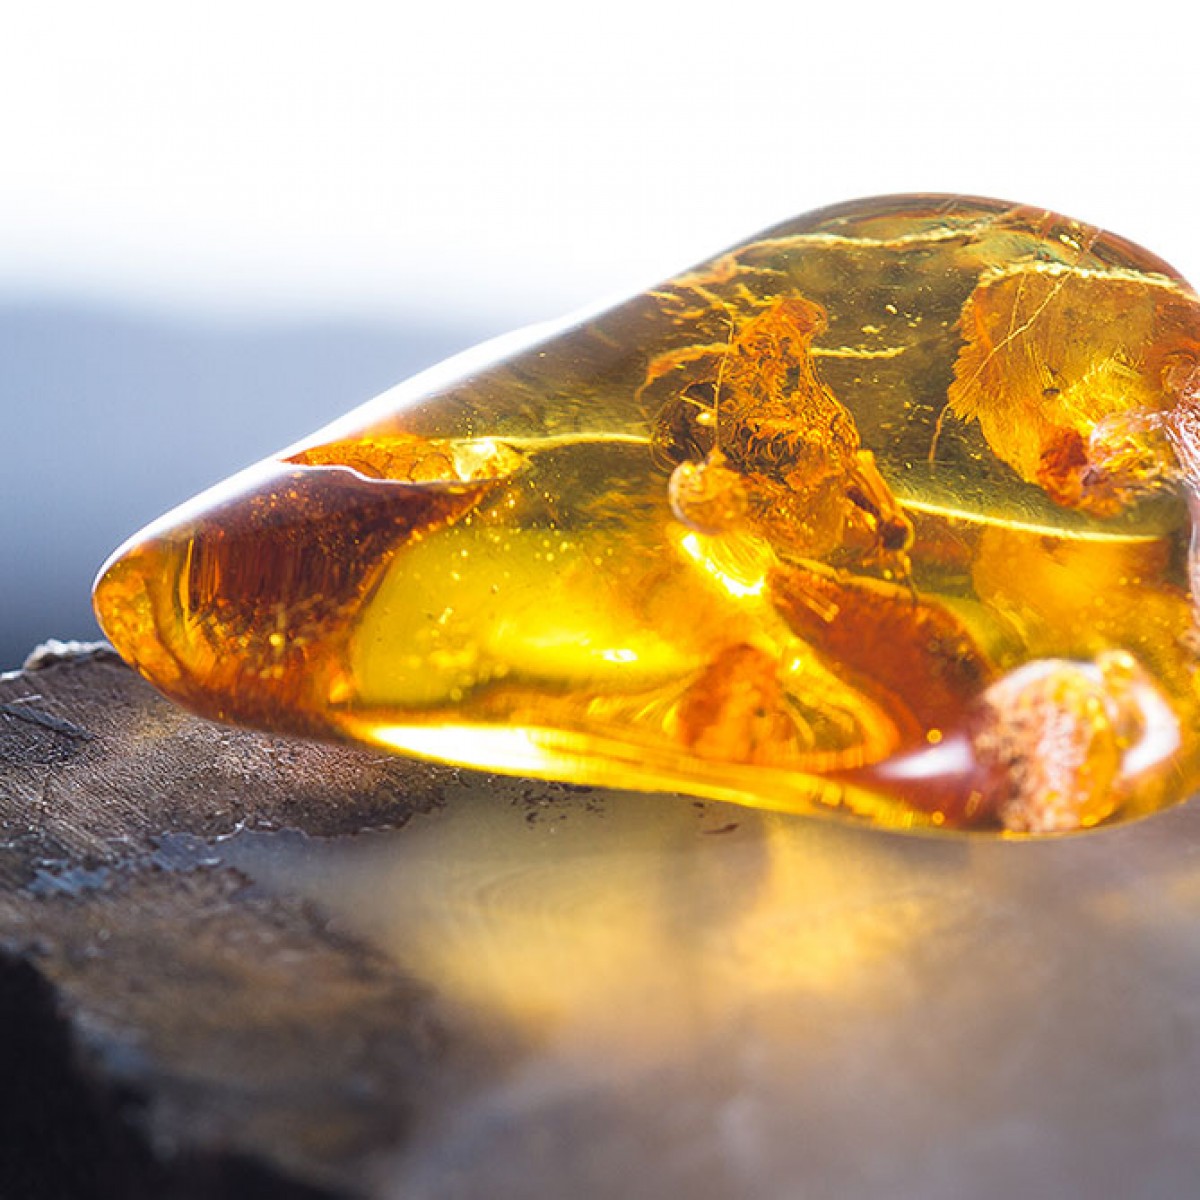 Amber Oil - Roller - Smudge Metaphysical